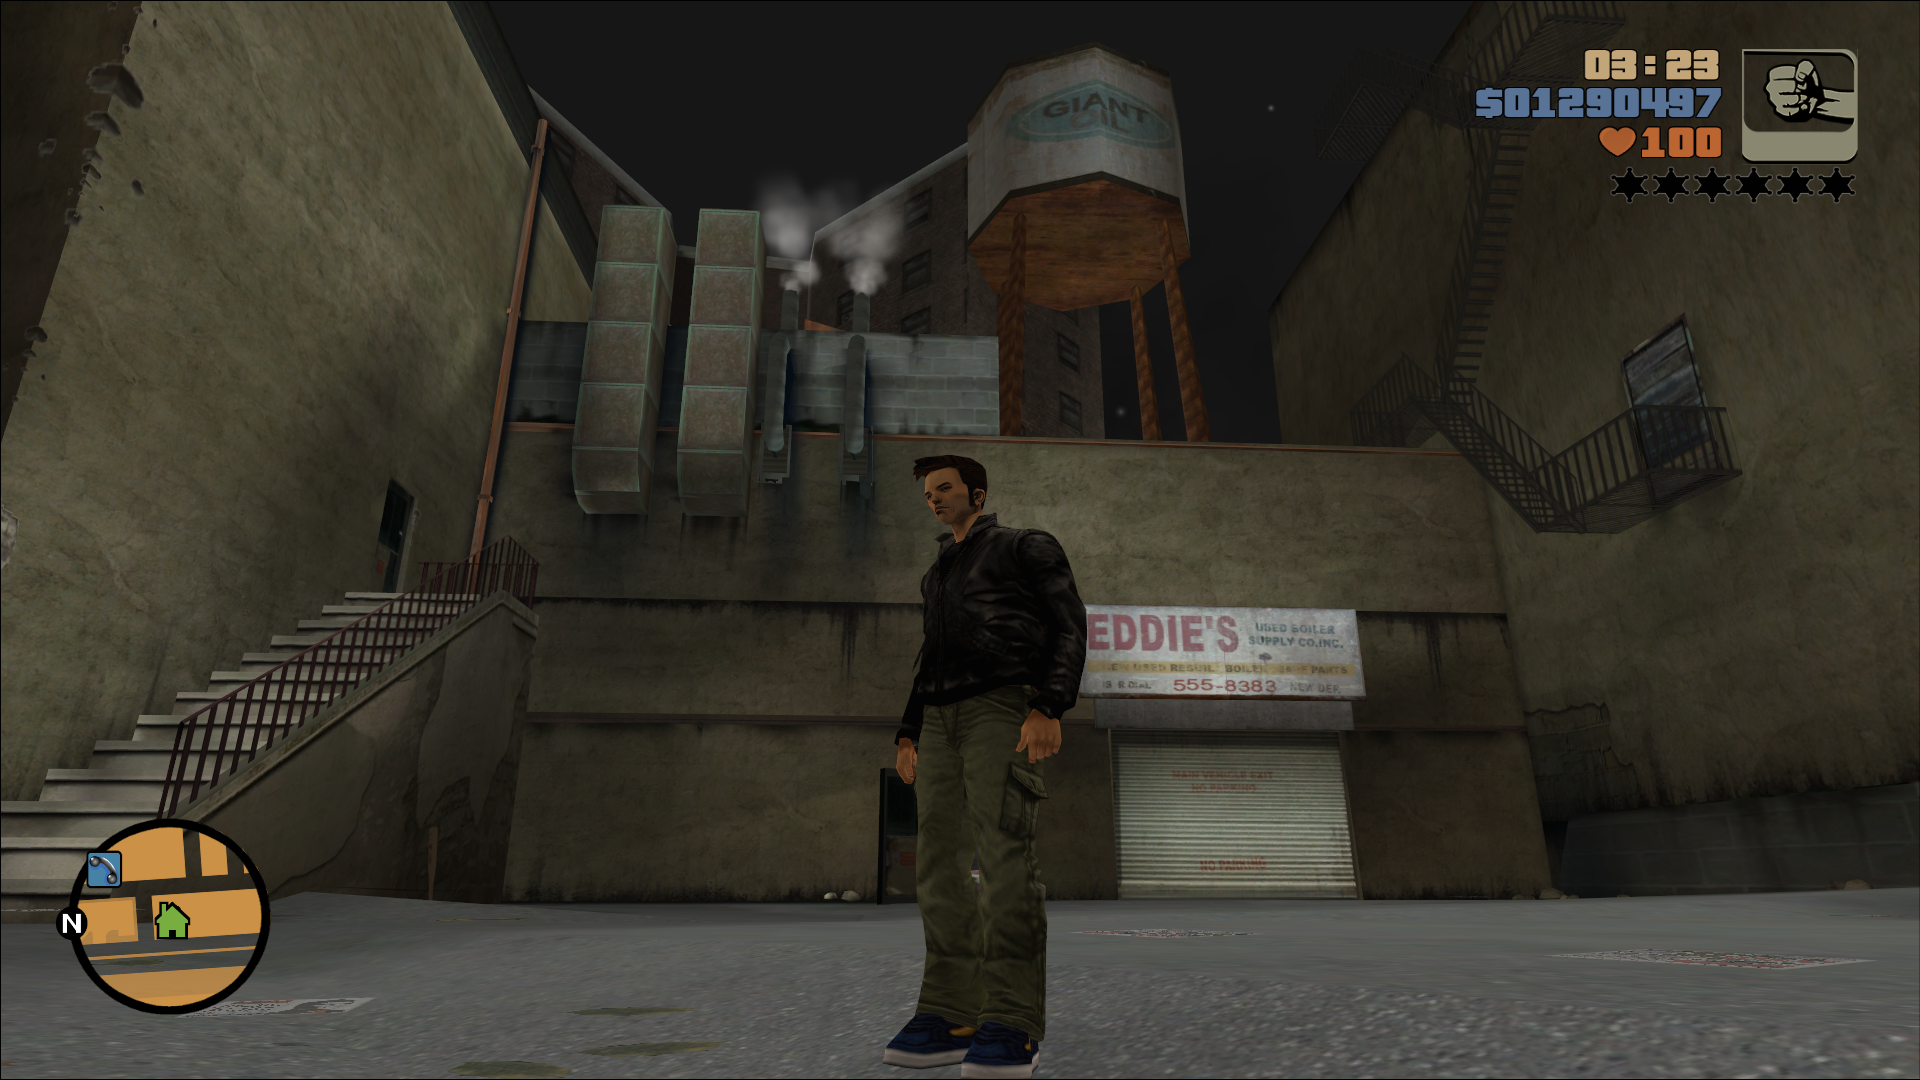 Grand Theft Auto III – The Definitive Edition - Graphics / Options Mod